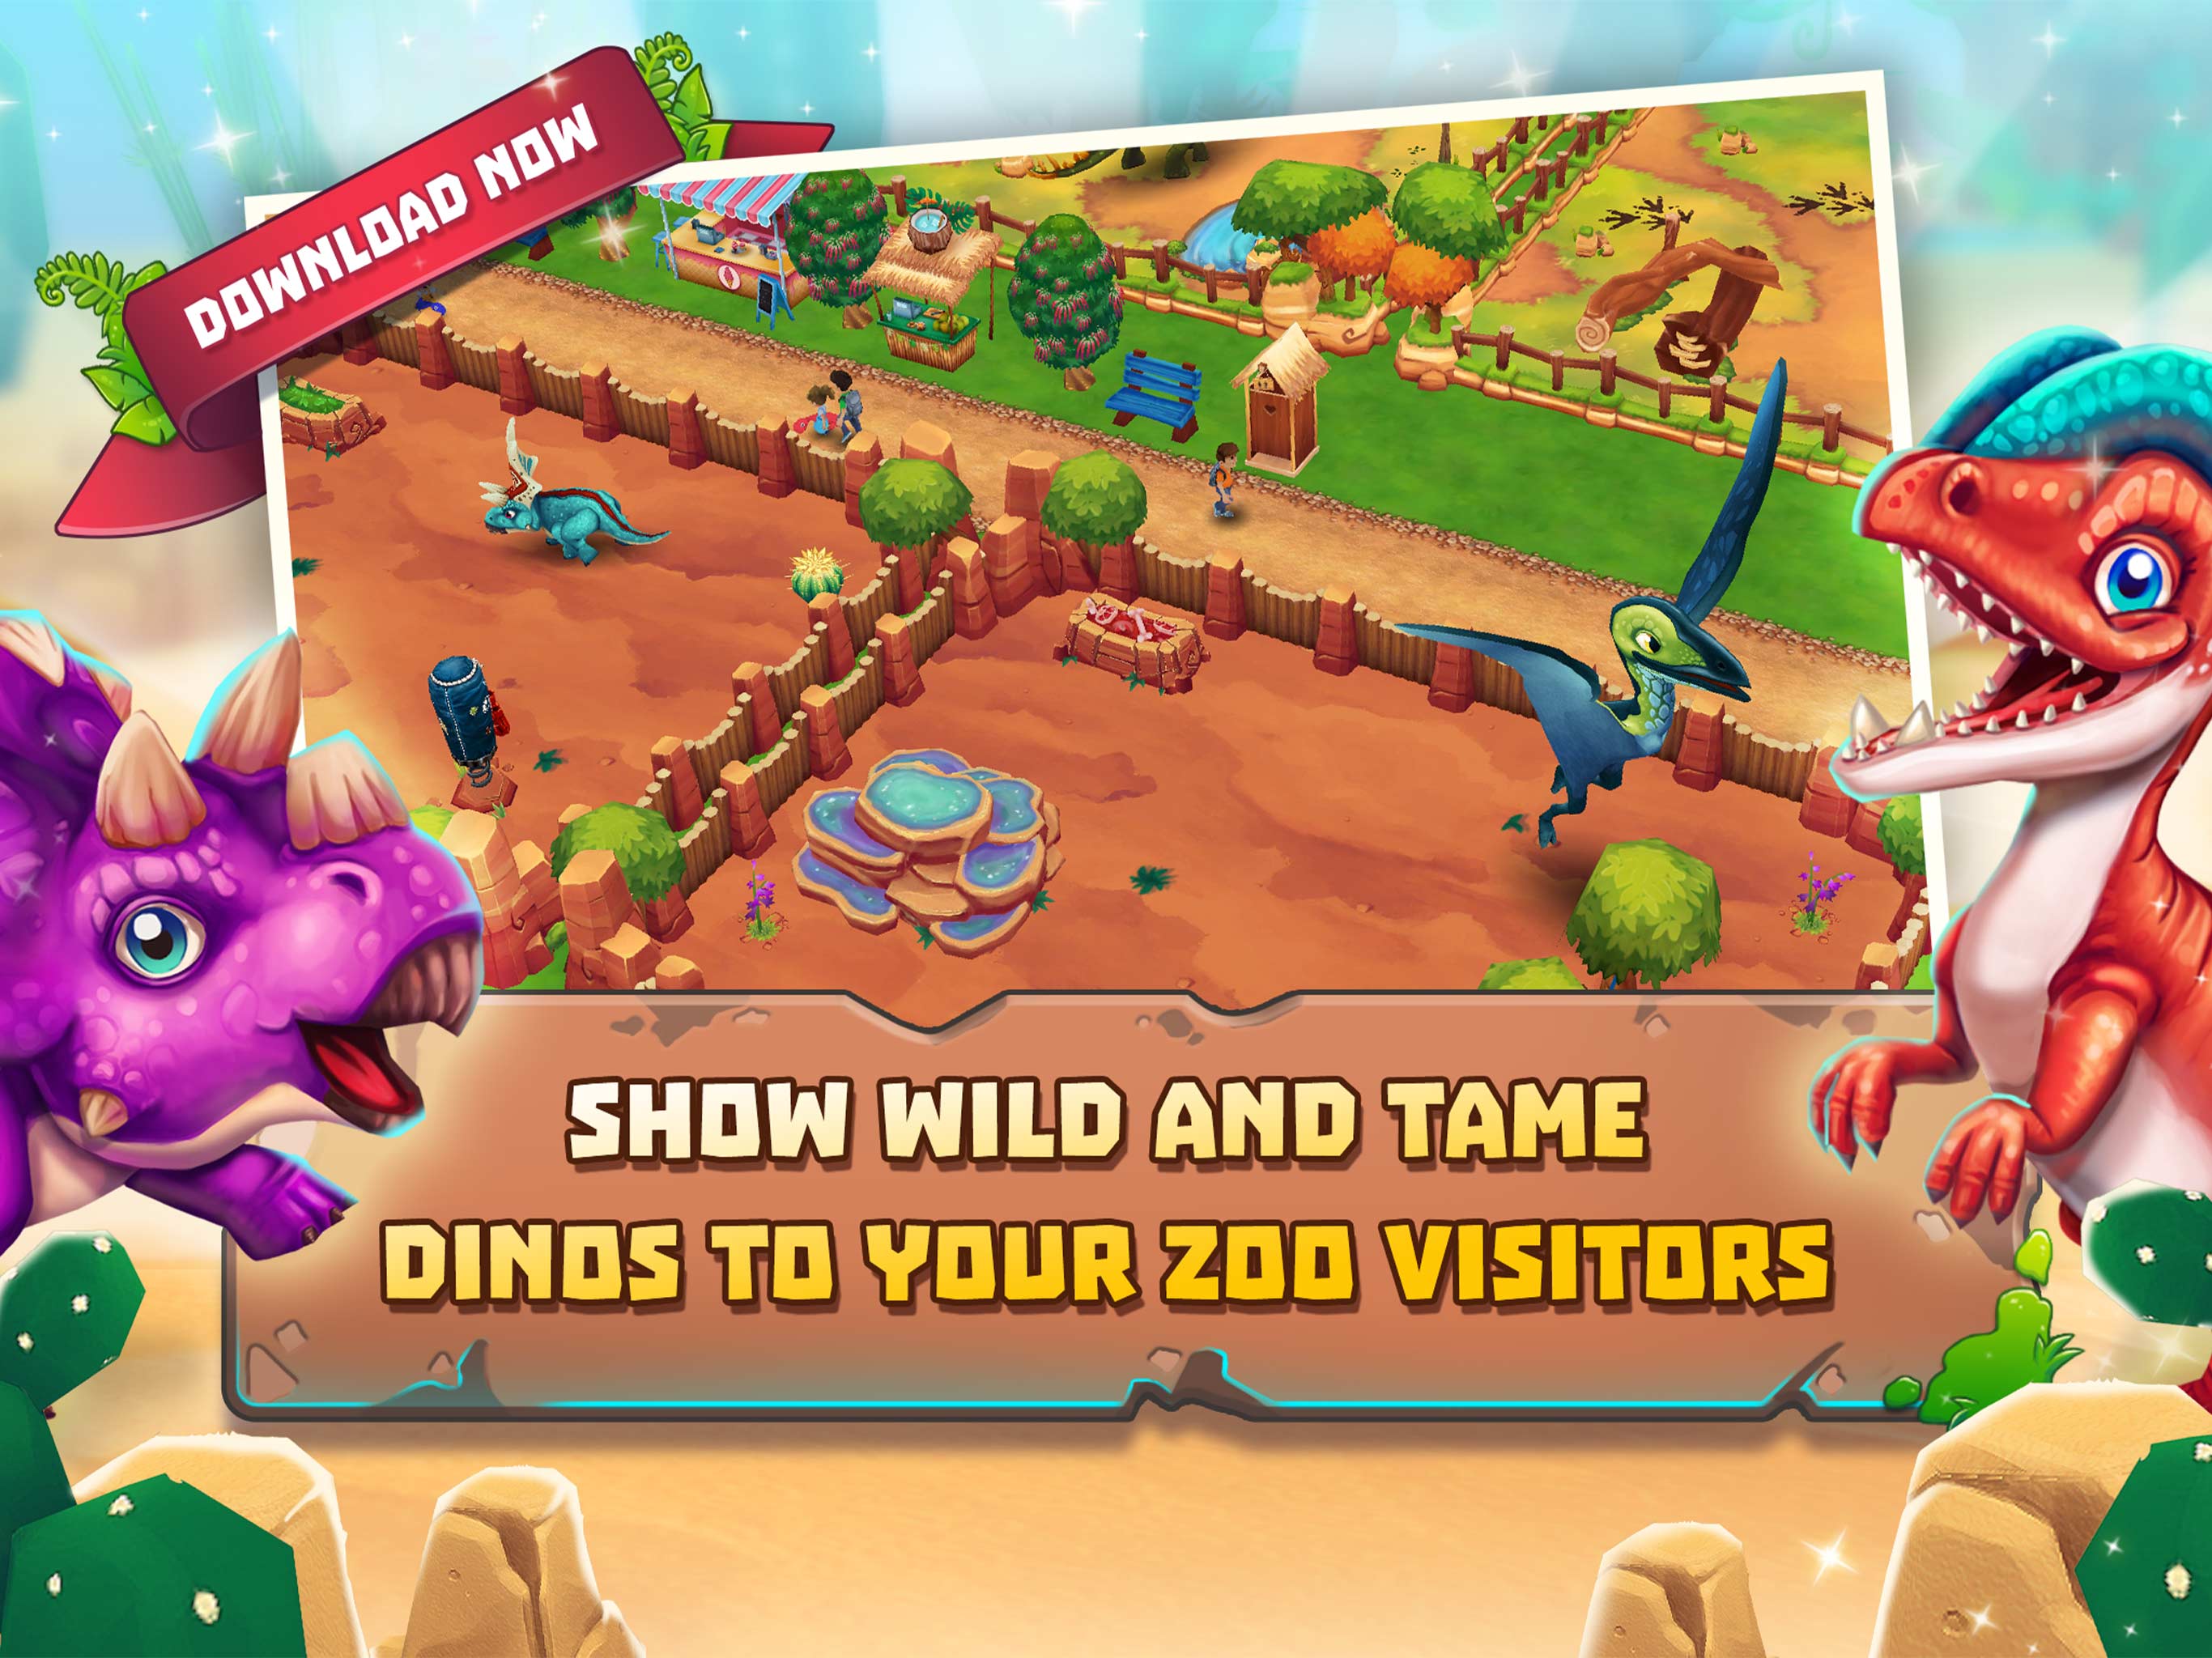 Zoo Tycoon: Dinosaur Digs - Game information hub